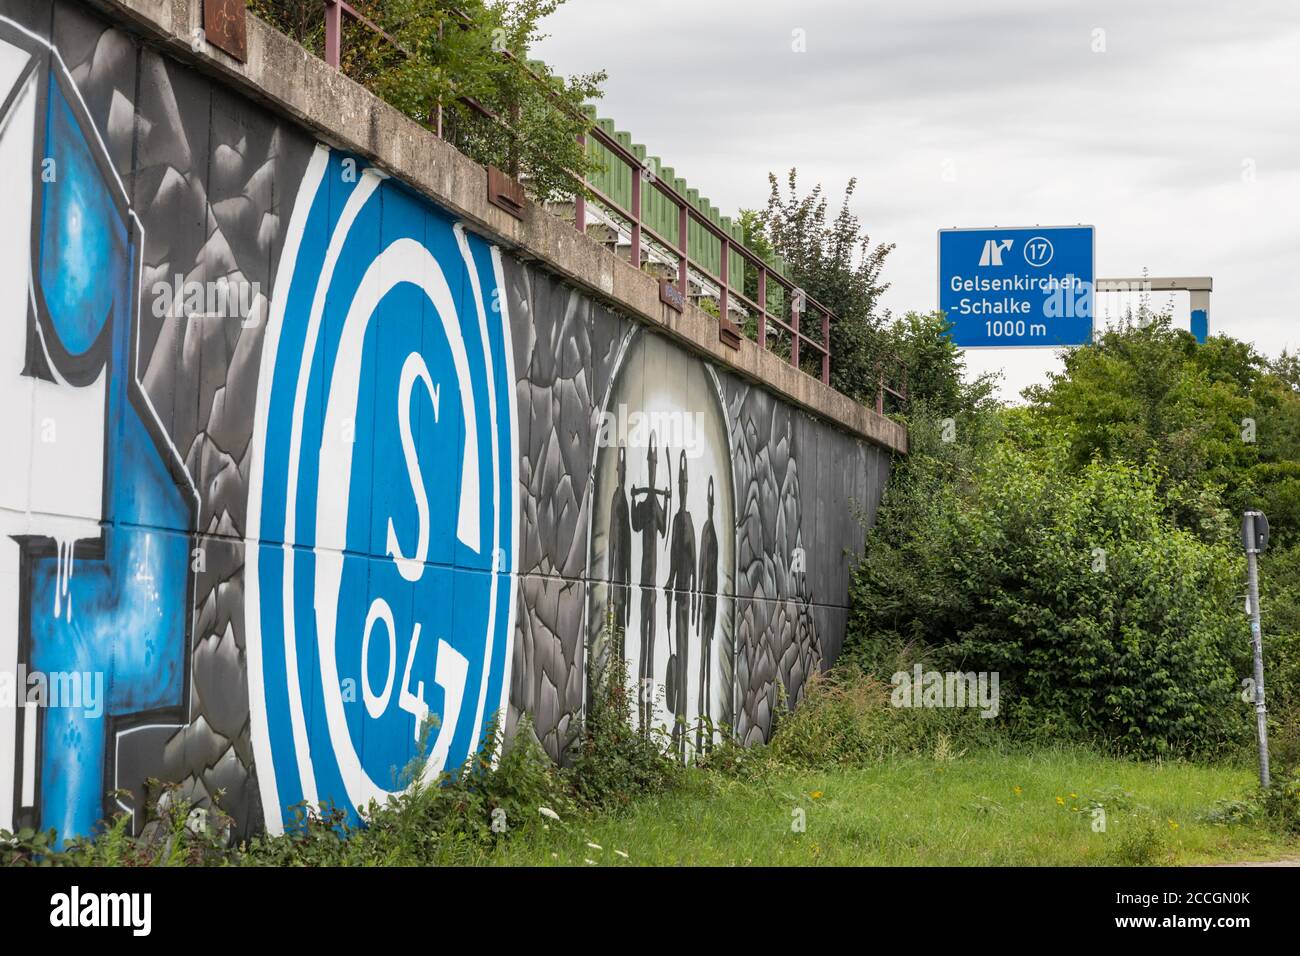 Schalke Fan graffiti et sortie d'autoroute, zone de Schalker Meile Fan du club de football FC Schalke 04, à Gelsenkirchen, Rhénanie-du-Nord-Westphalie, Allemagne Banque D'Images